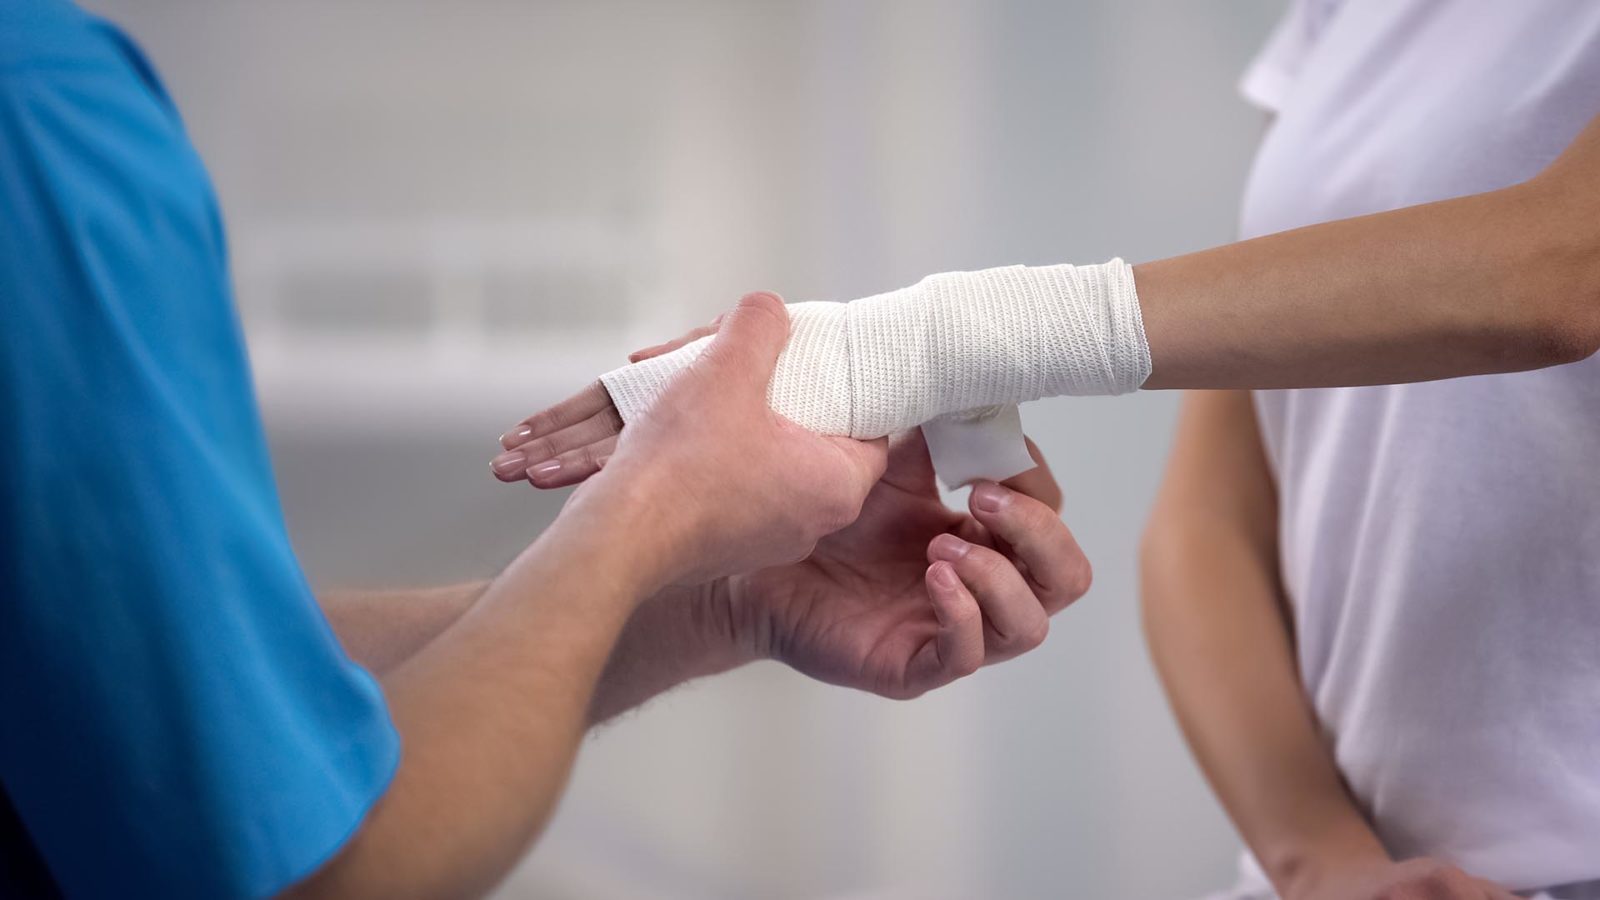 wrapping wrist injury with bandage